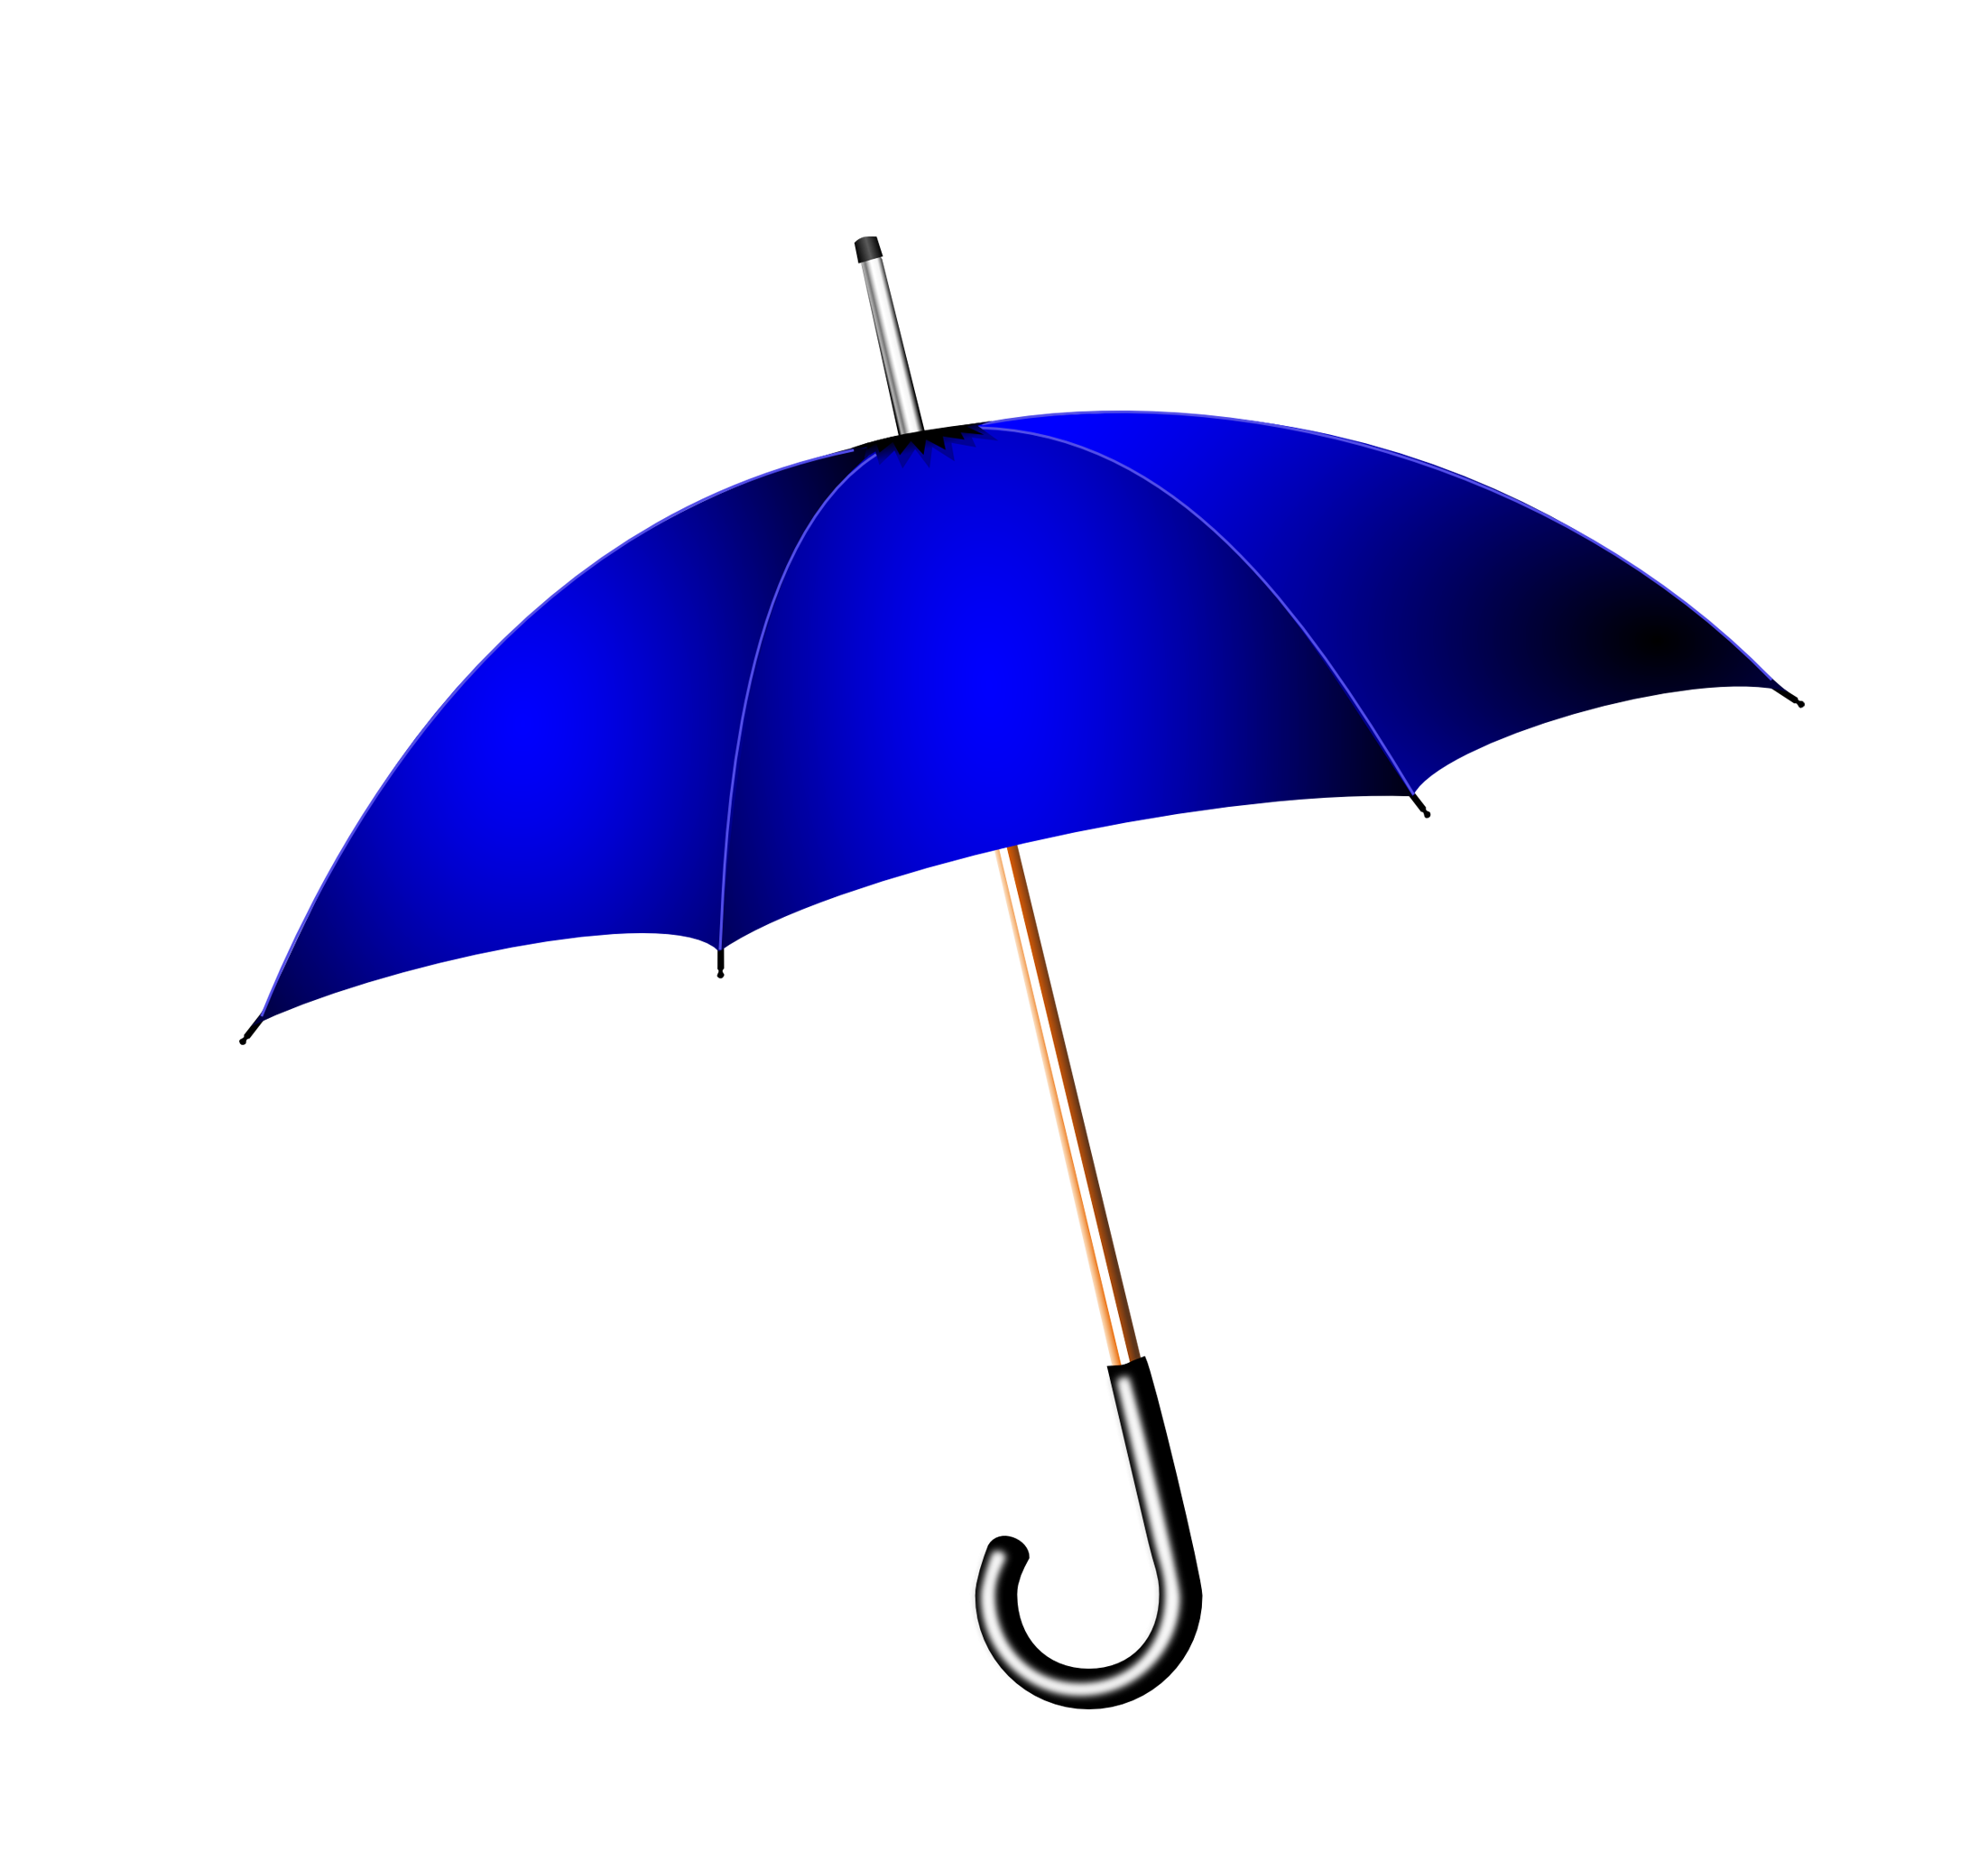 Blue Umbrella PNG Image in High Definition pngteam.com